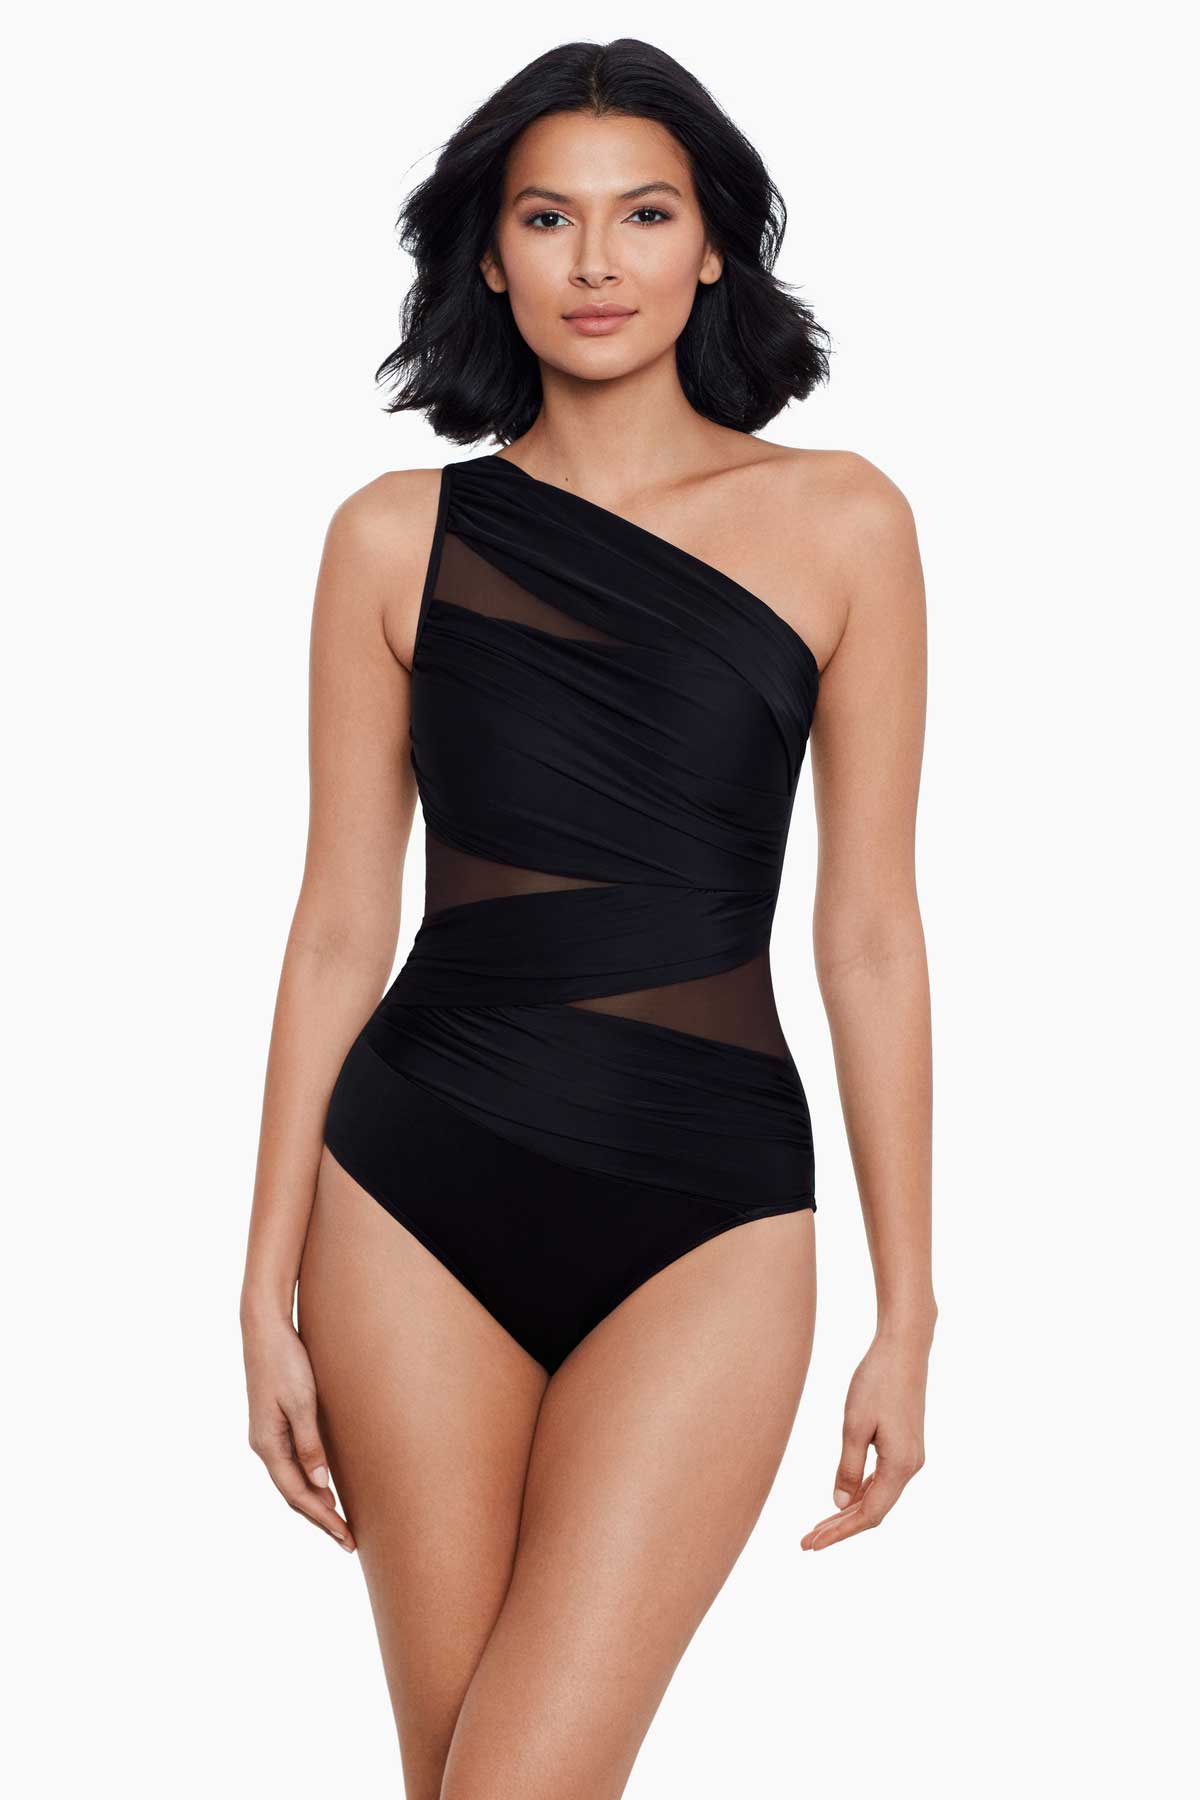 Boutique Option-Miraclesuit 1 Piece Swimsuit in Black/White color